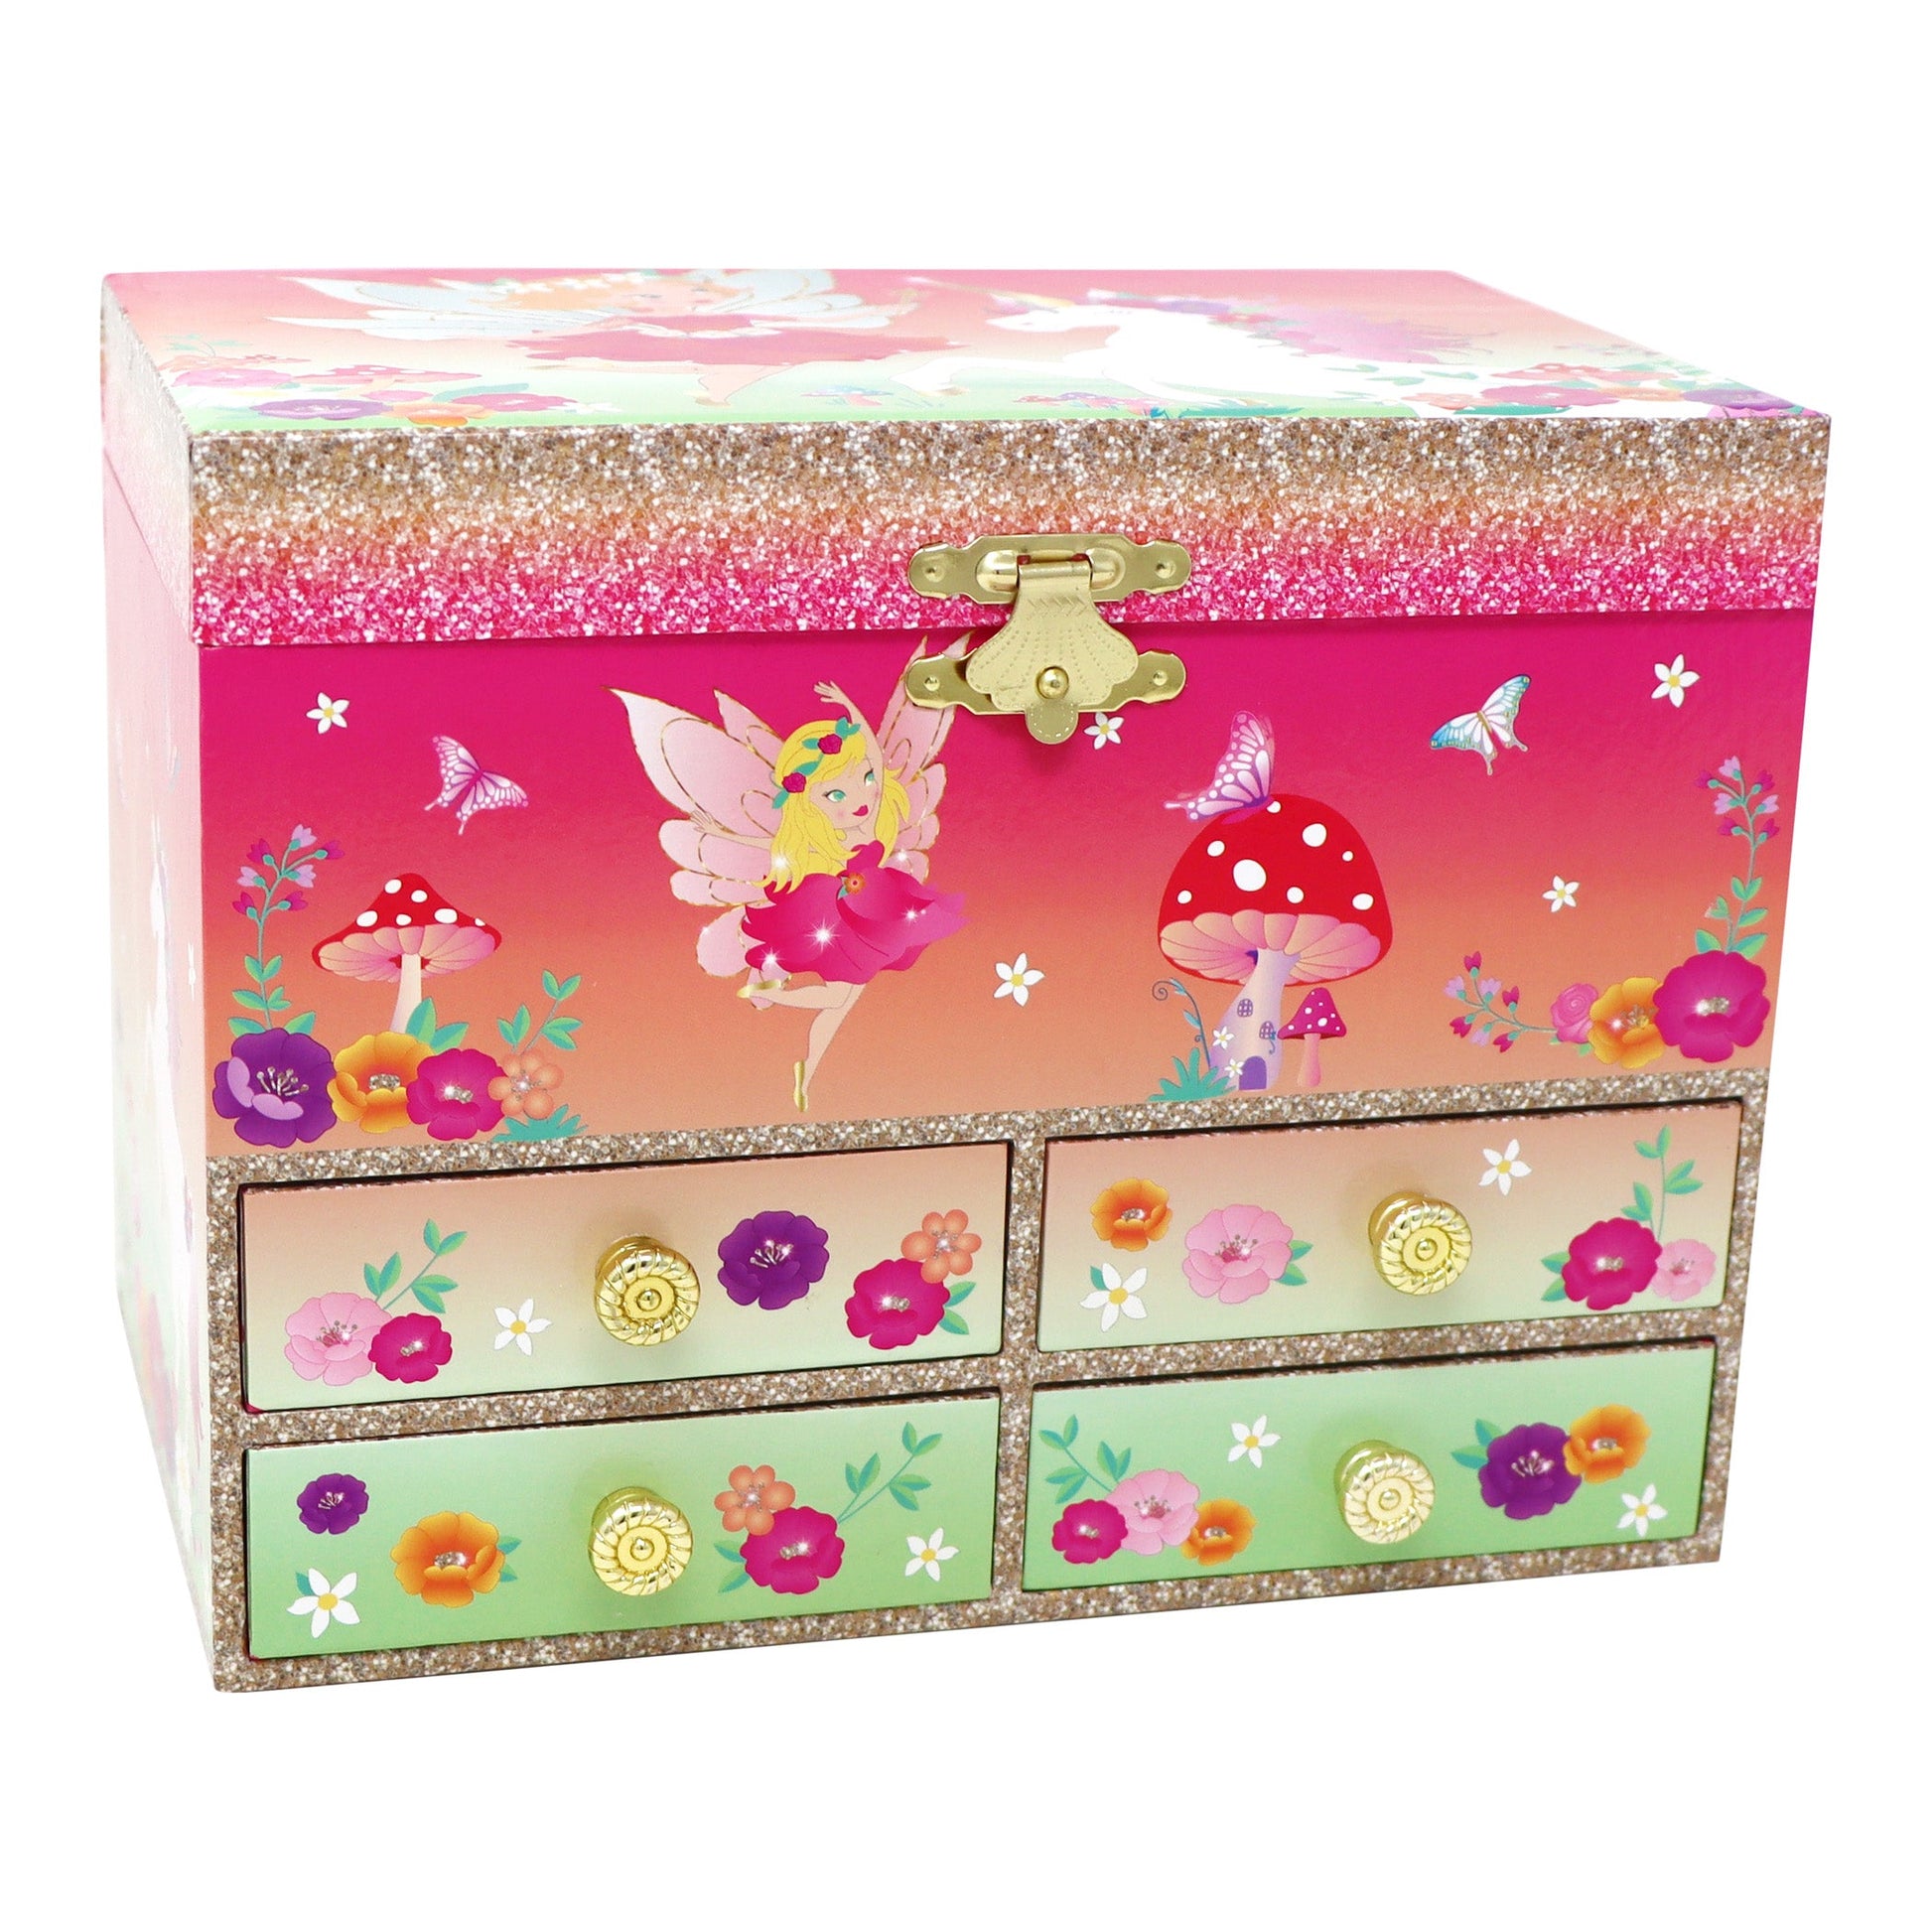 Pink Poppy Pixie Fantasy Medium Unicorn Fairy Musical Jewellery Box The Toy Wagon